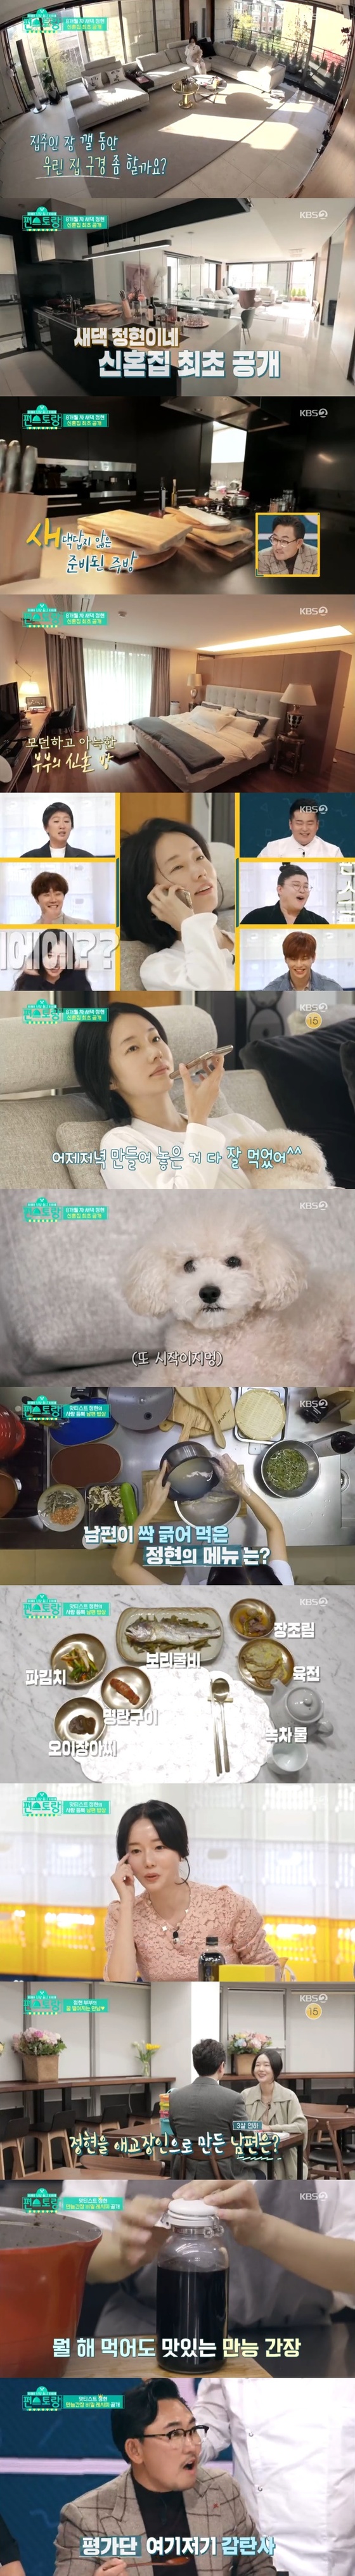 KBS 2TV '편스토랑' 캡처 © 뉴스1